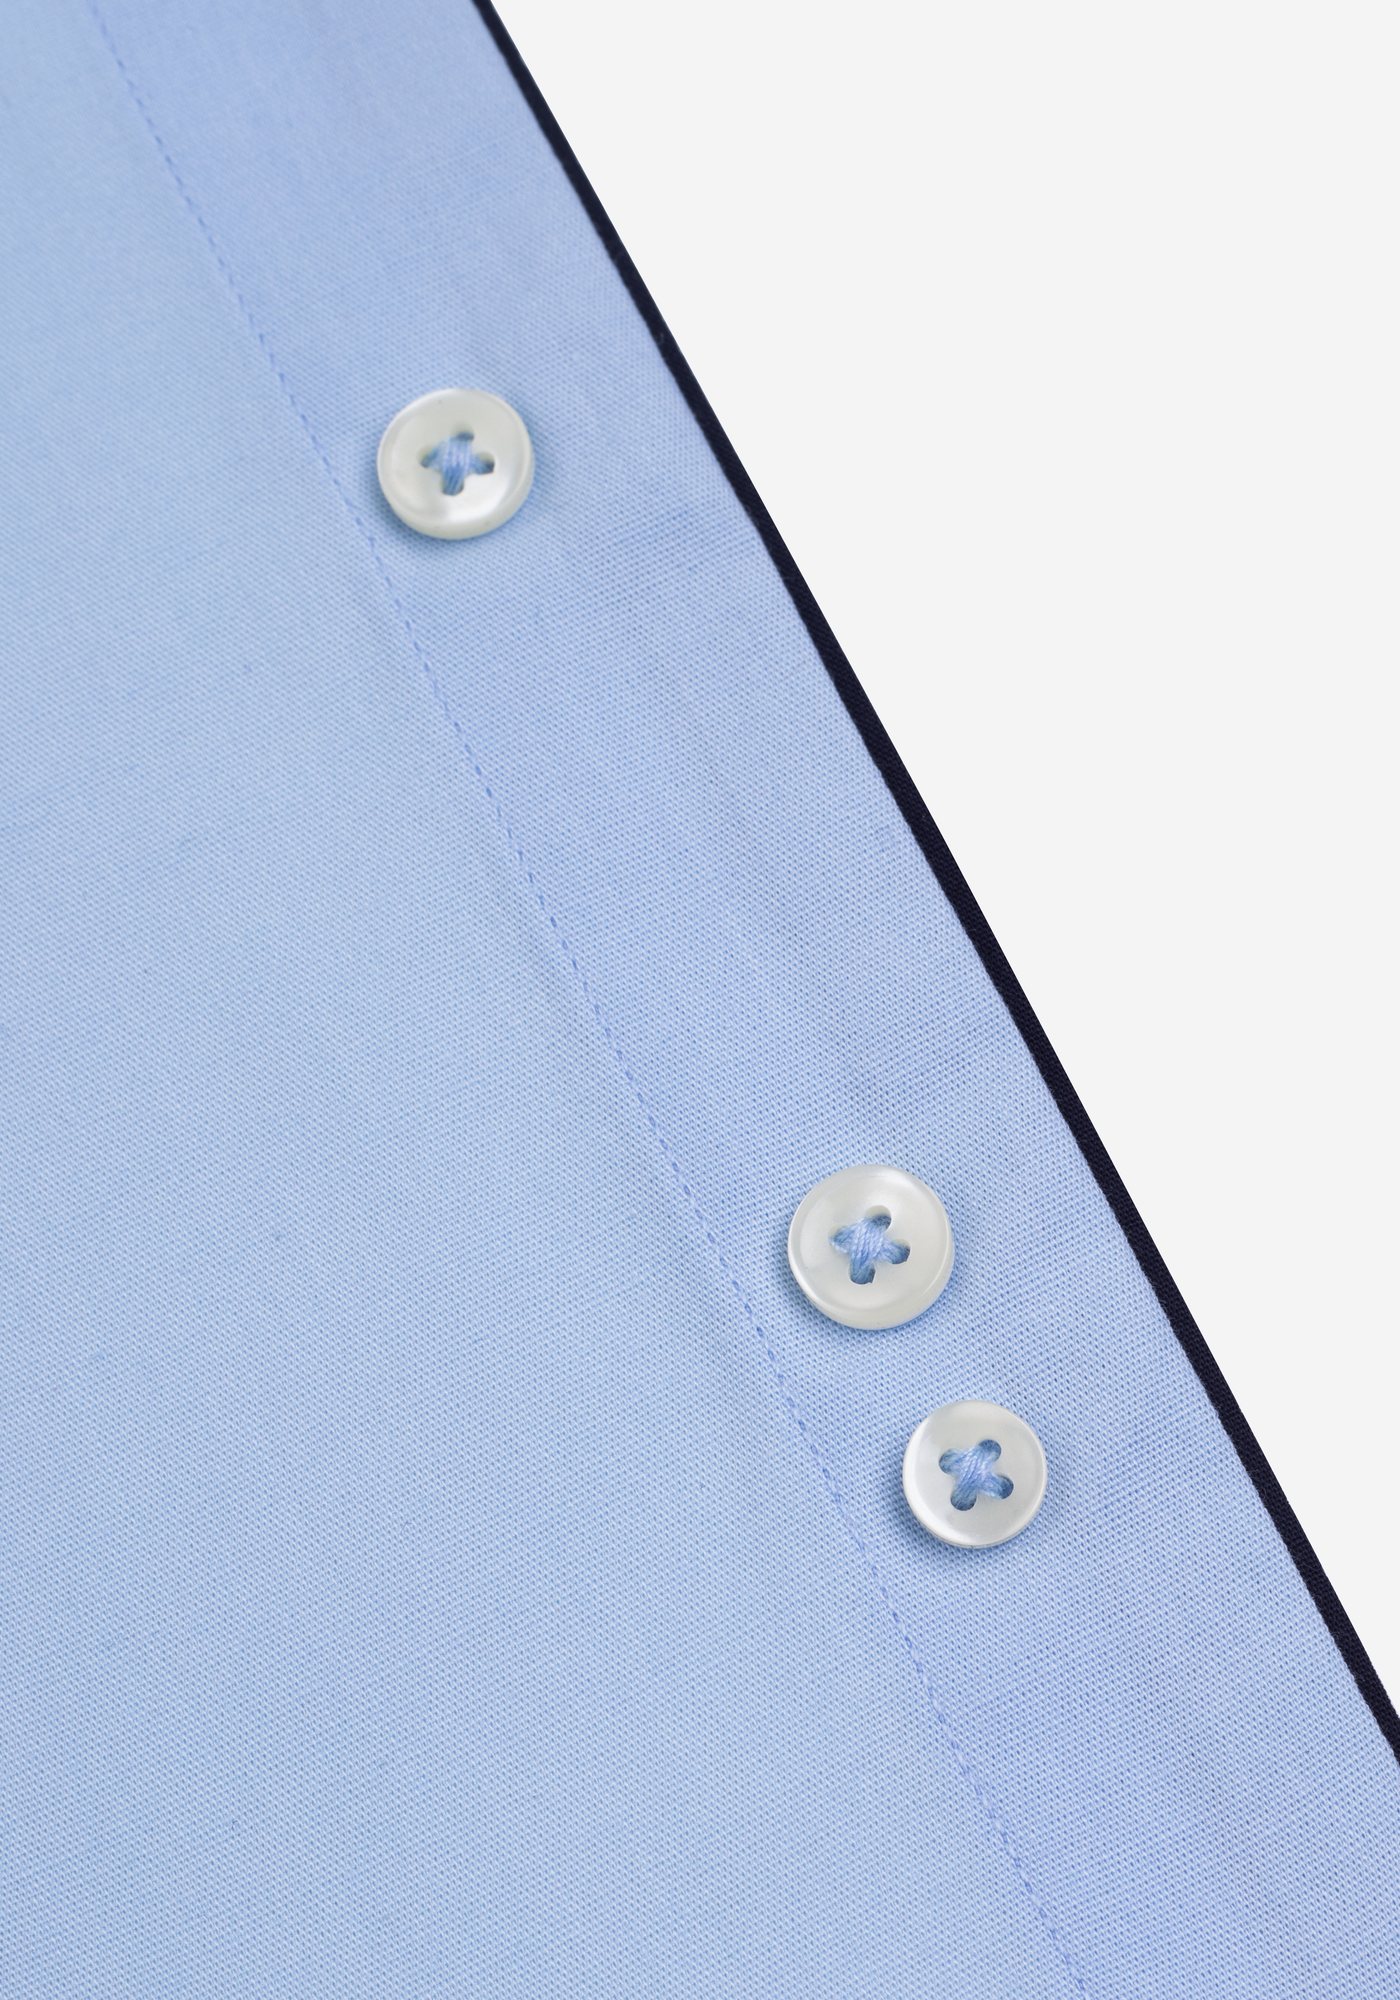 Skylight Blue Cotton Lycra Shirt